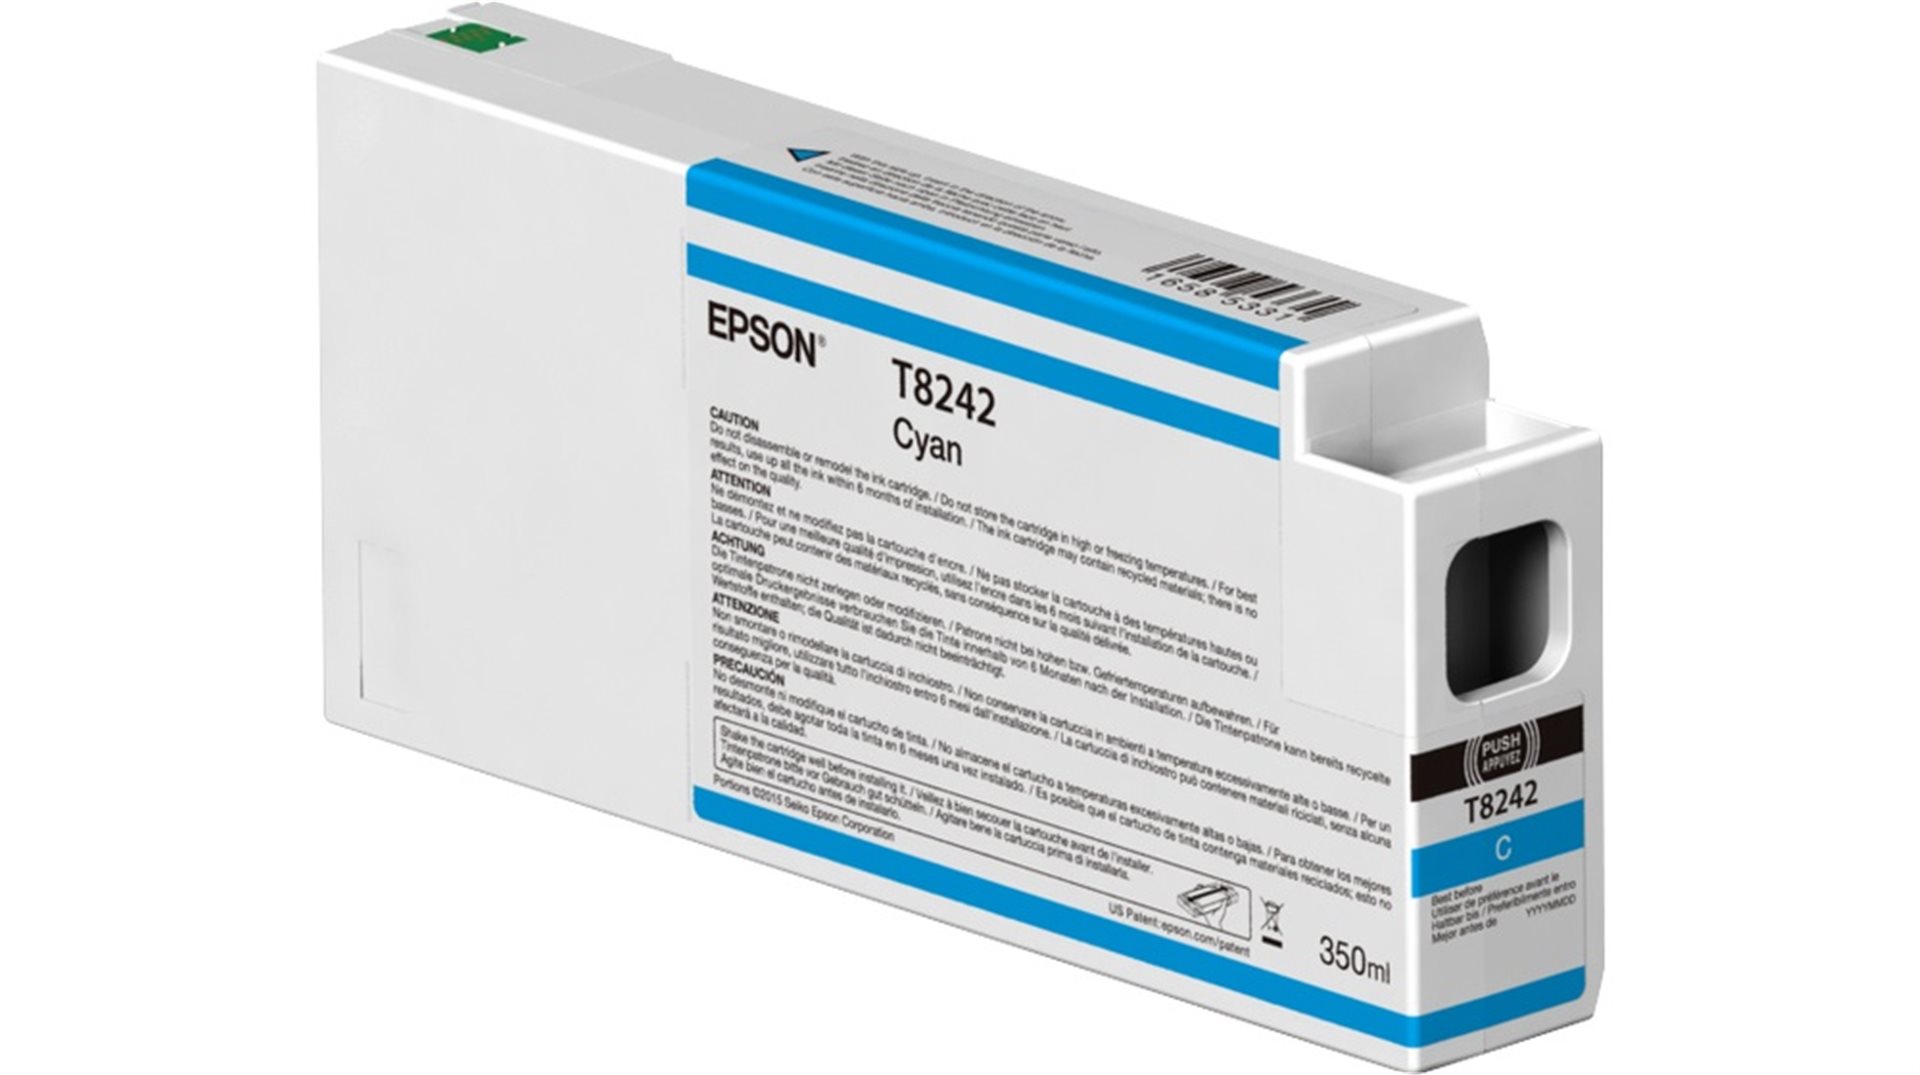 Epson Light Black T54X700 UltraChrome HDX/HD, 350 ml